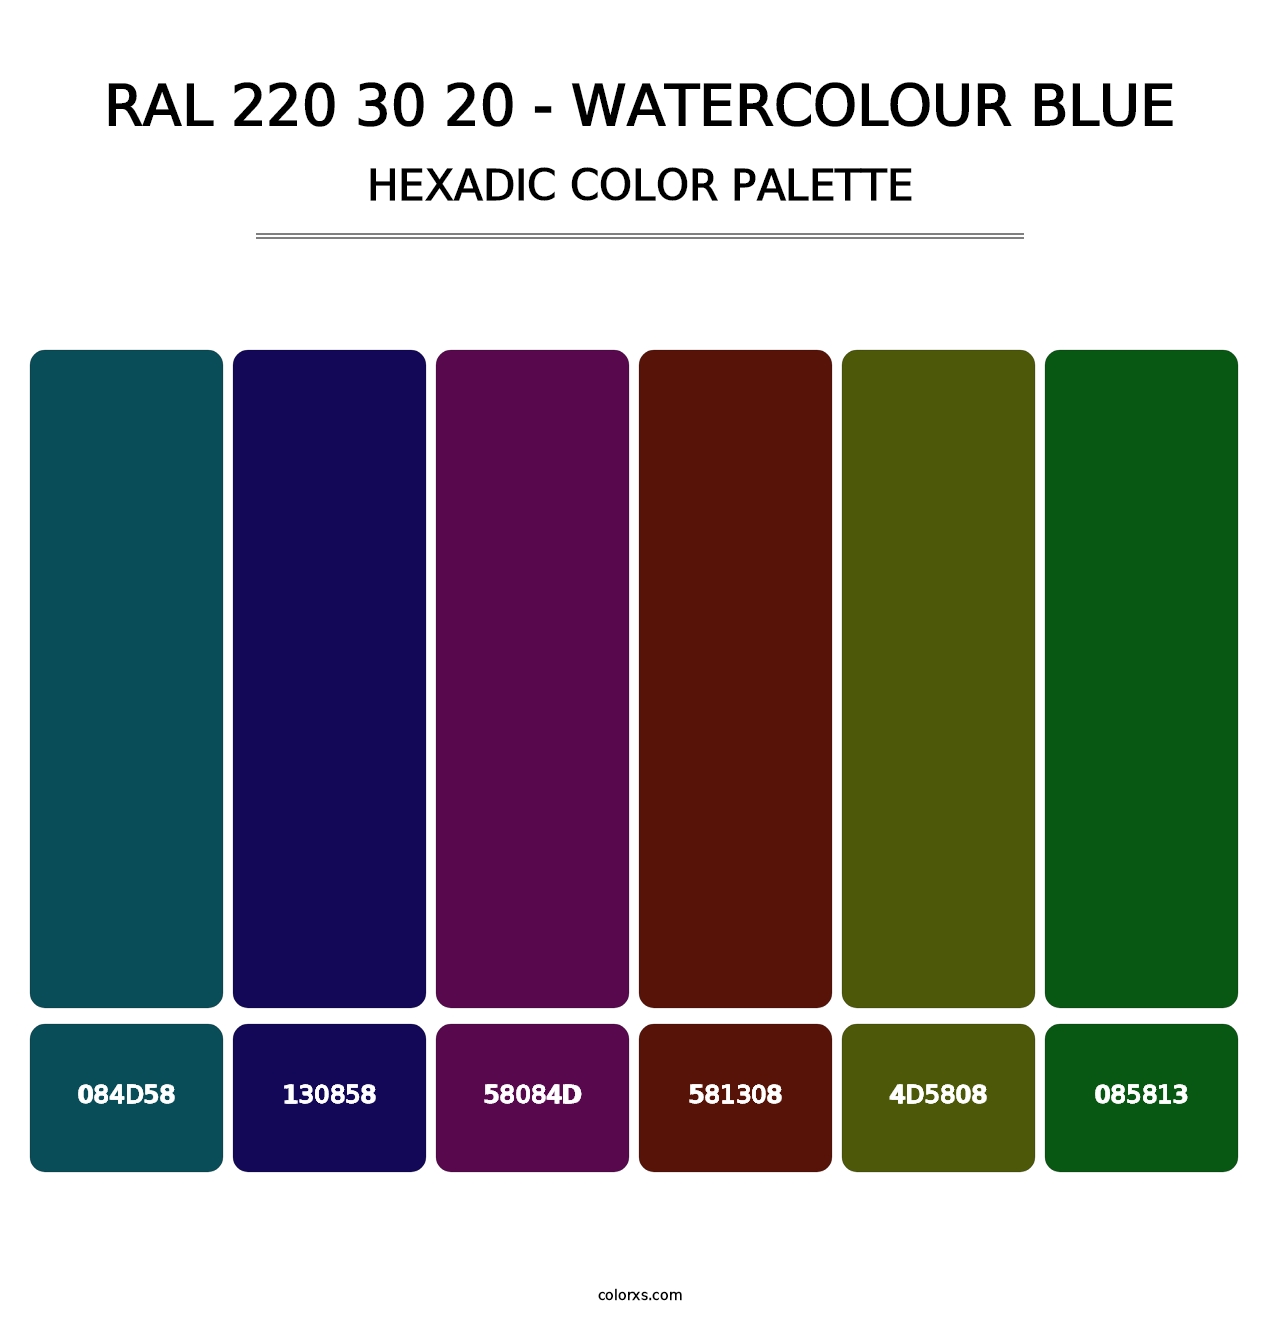 RAL 220 30 20 - Watercolour Blue - Hexadic Color Palette